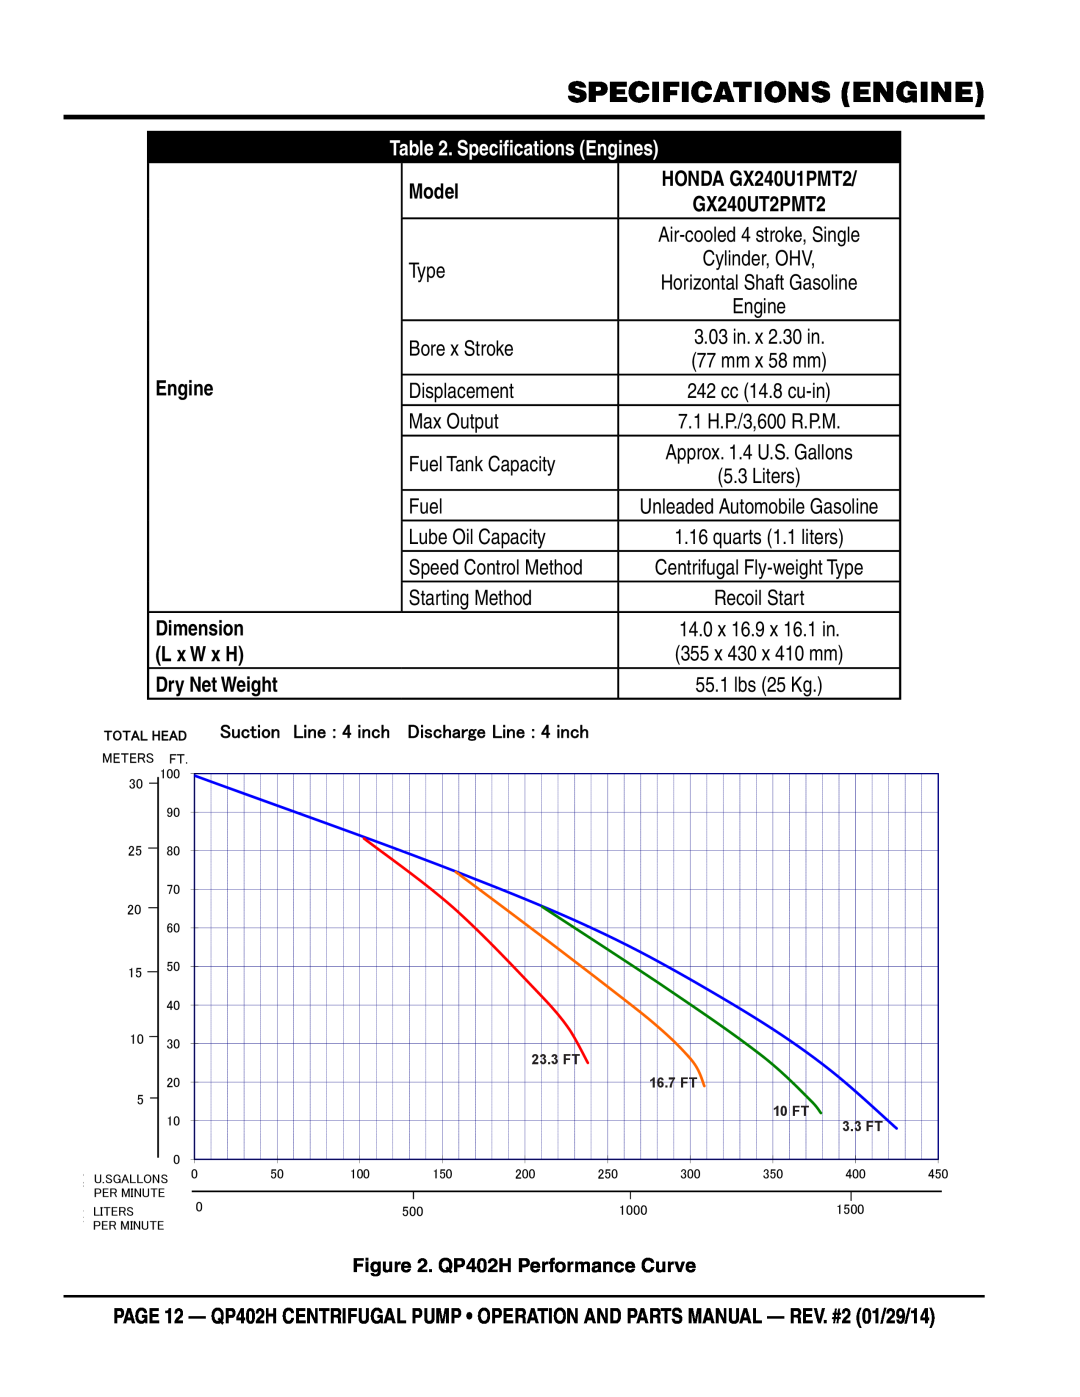 Multiquip qp402h Specifications Engines, HONDA GX240U1PMT2, Dimension, L x W x H, Model, Dry Net Weight, GX240UT2PMT2 